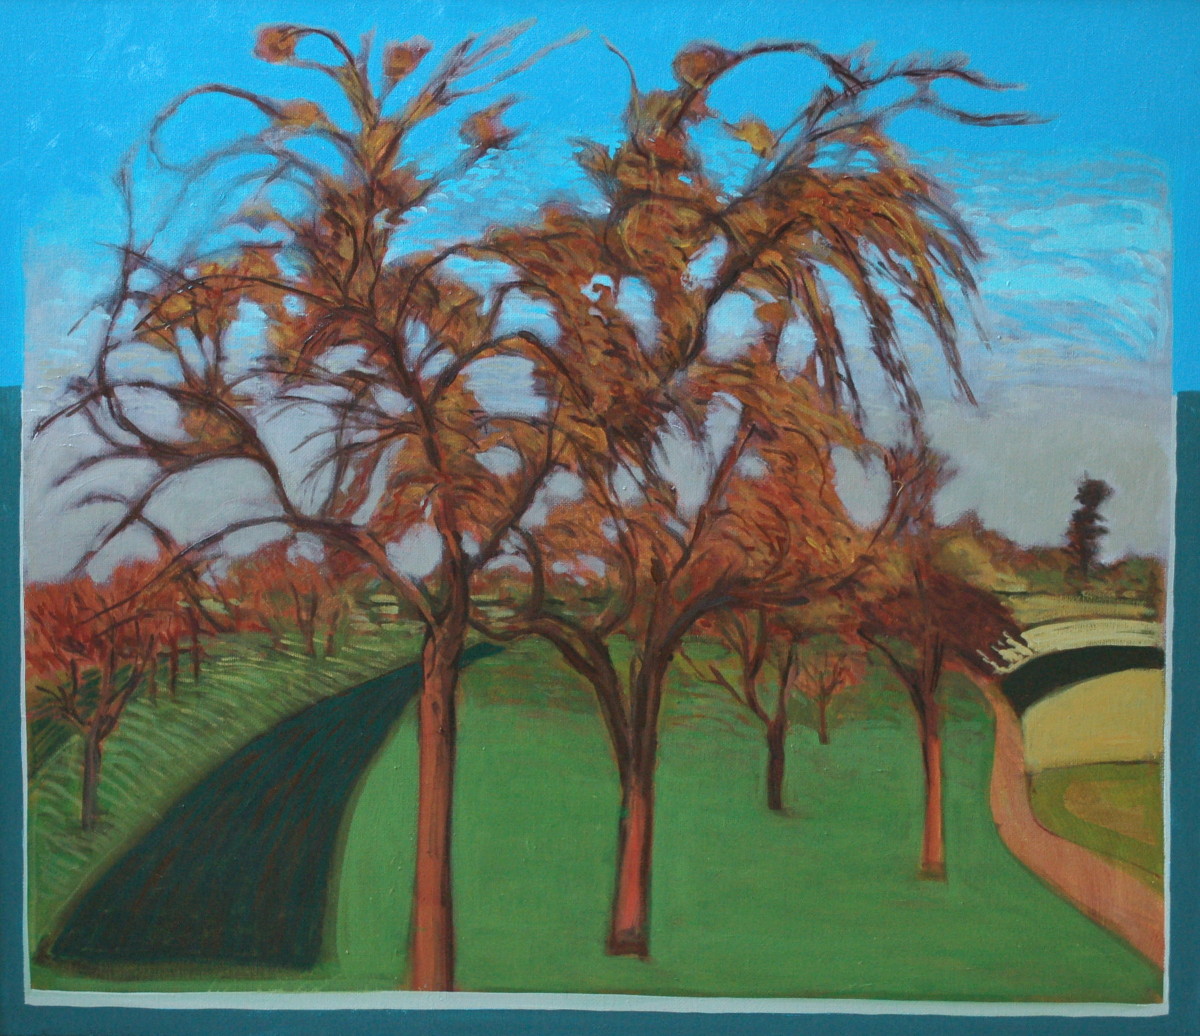 Brian Bourke: Apfelbäume I, 2016, oil on canvas, 91.5 x 94 cm | Brian Bourke: Apfelbäume | Friday 2 September – Saturday 17 September 2016 | Taylor Galleries